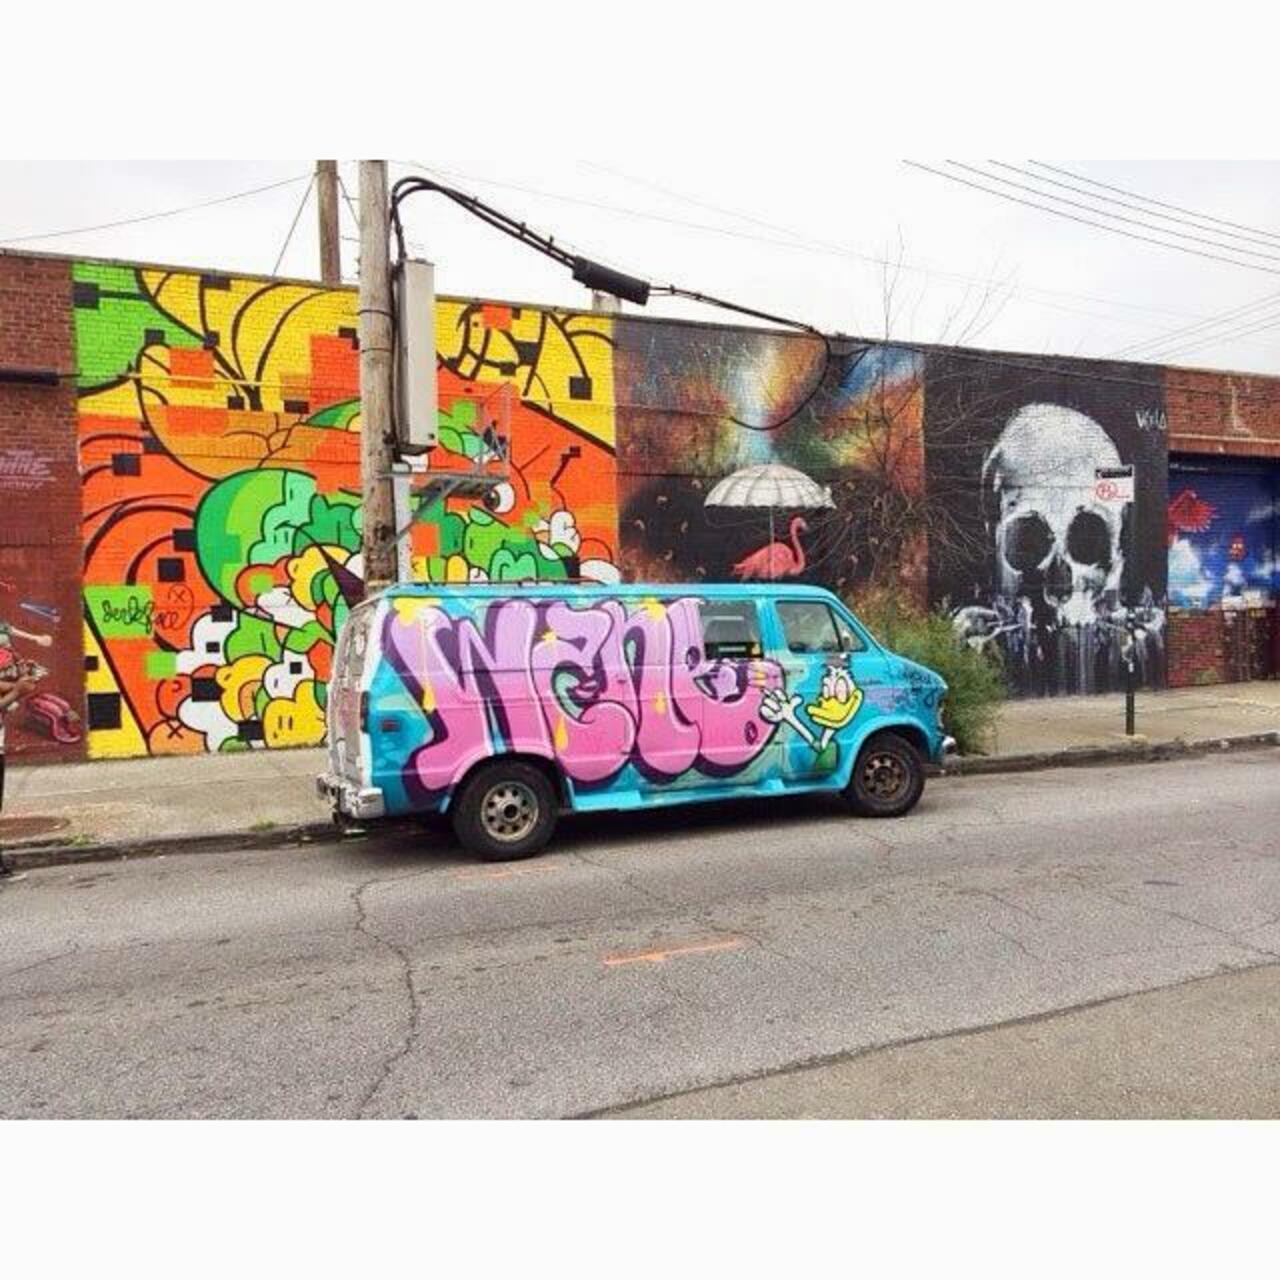 I saw this van in #brooklyn . Does anyone know of the #artist ? #streetart #graffiti http://t.co/YzQSt5rWBu